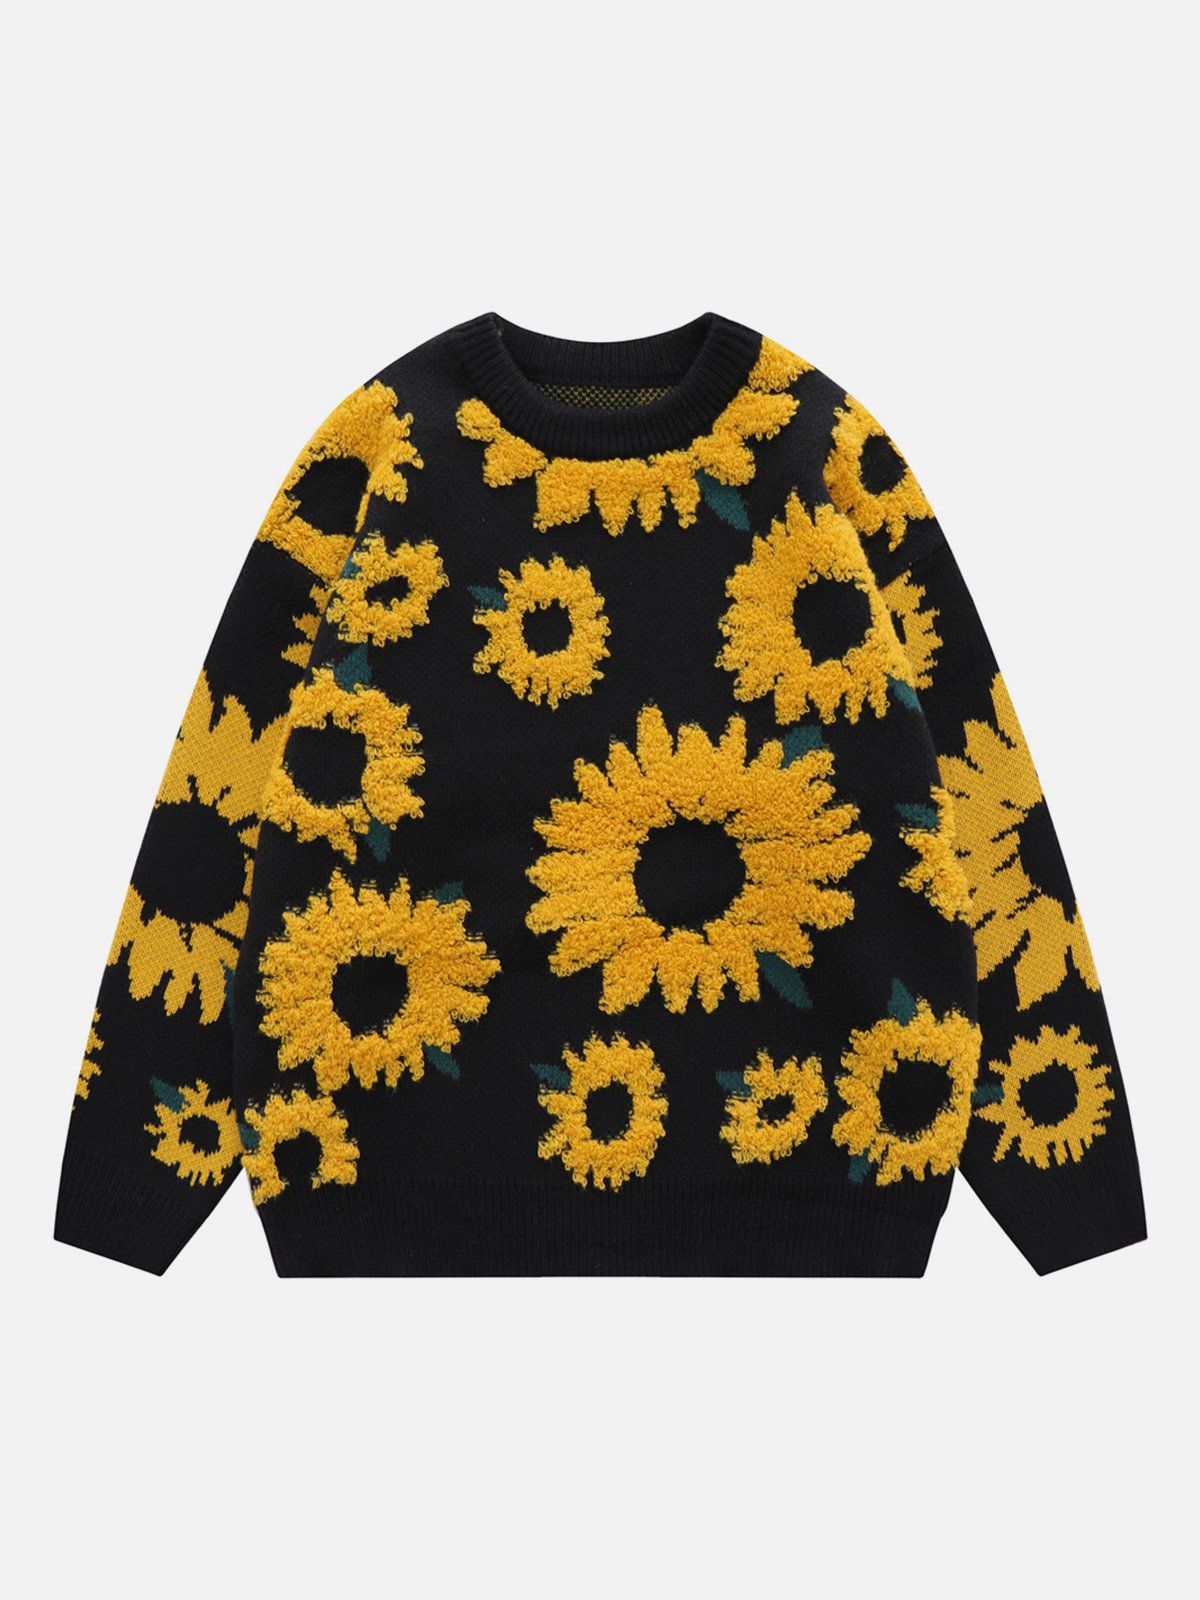 Aelfric Eden Sunflower Flocking Print Sweater @lamia.e.lhari